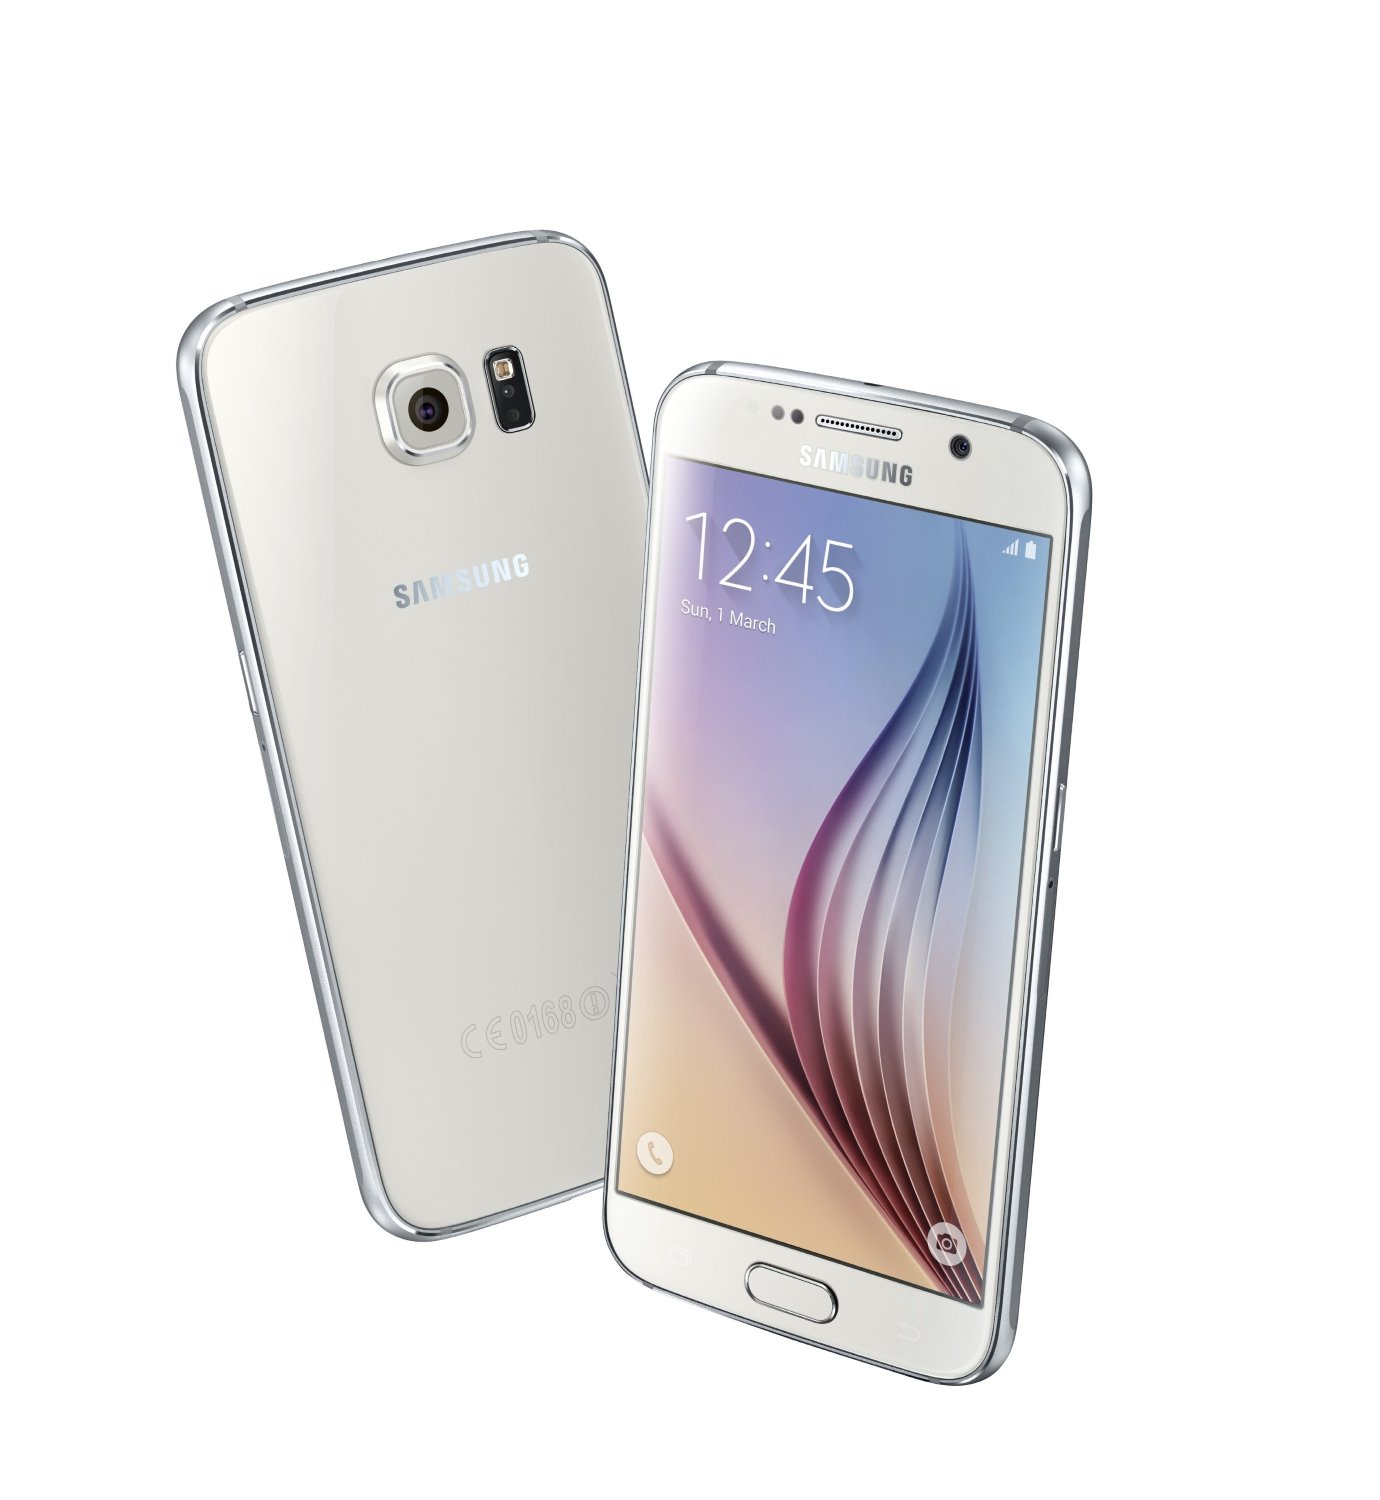 Samsung GALAXY S6 - White Pearl 